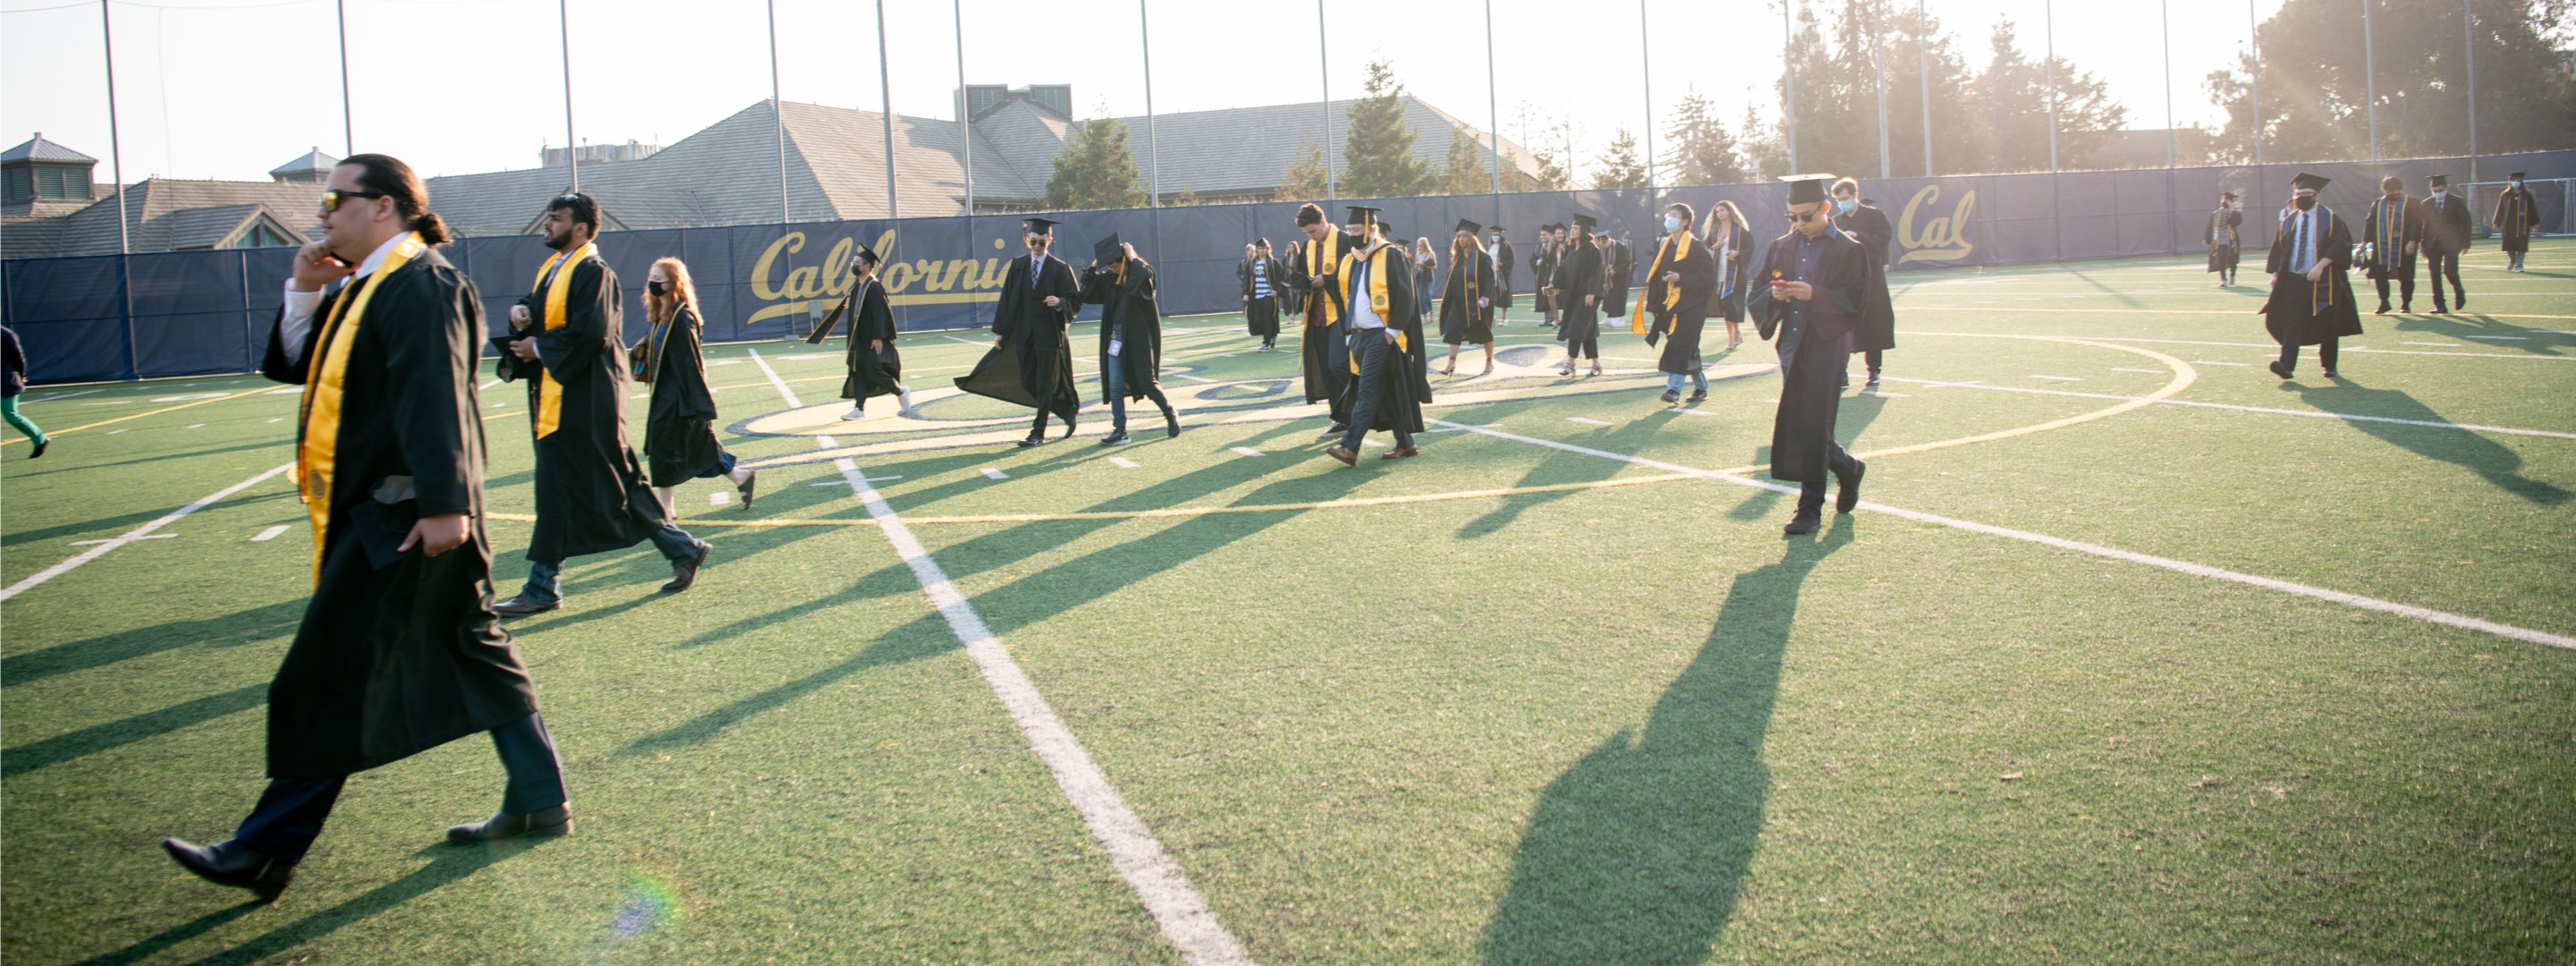 Graduates walking across football field